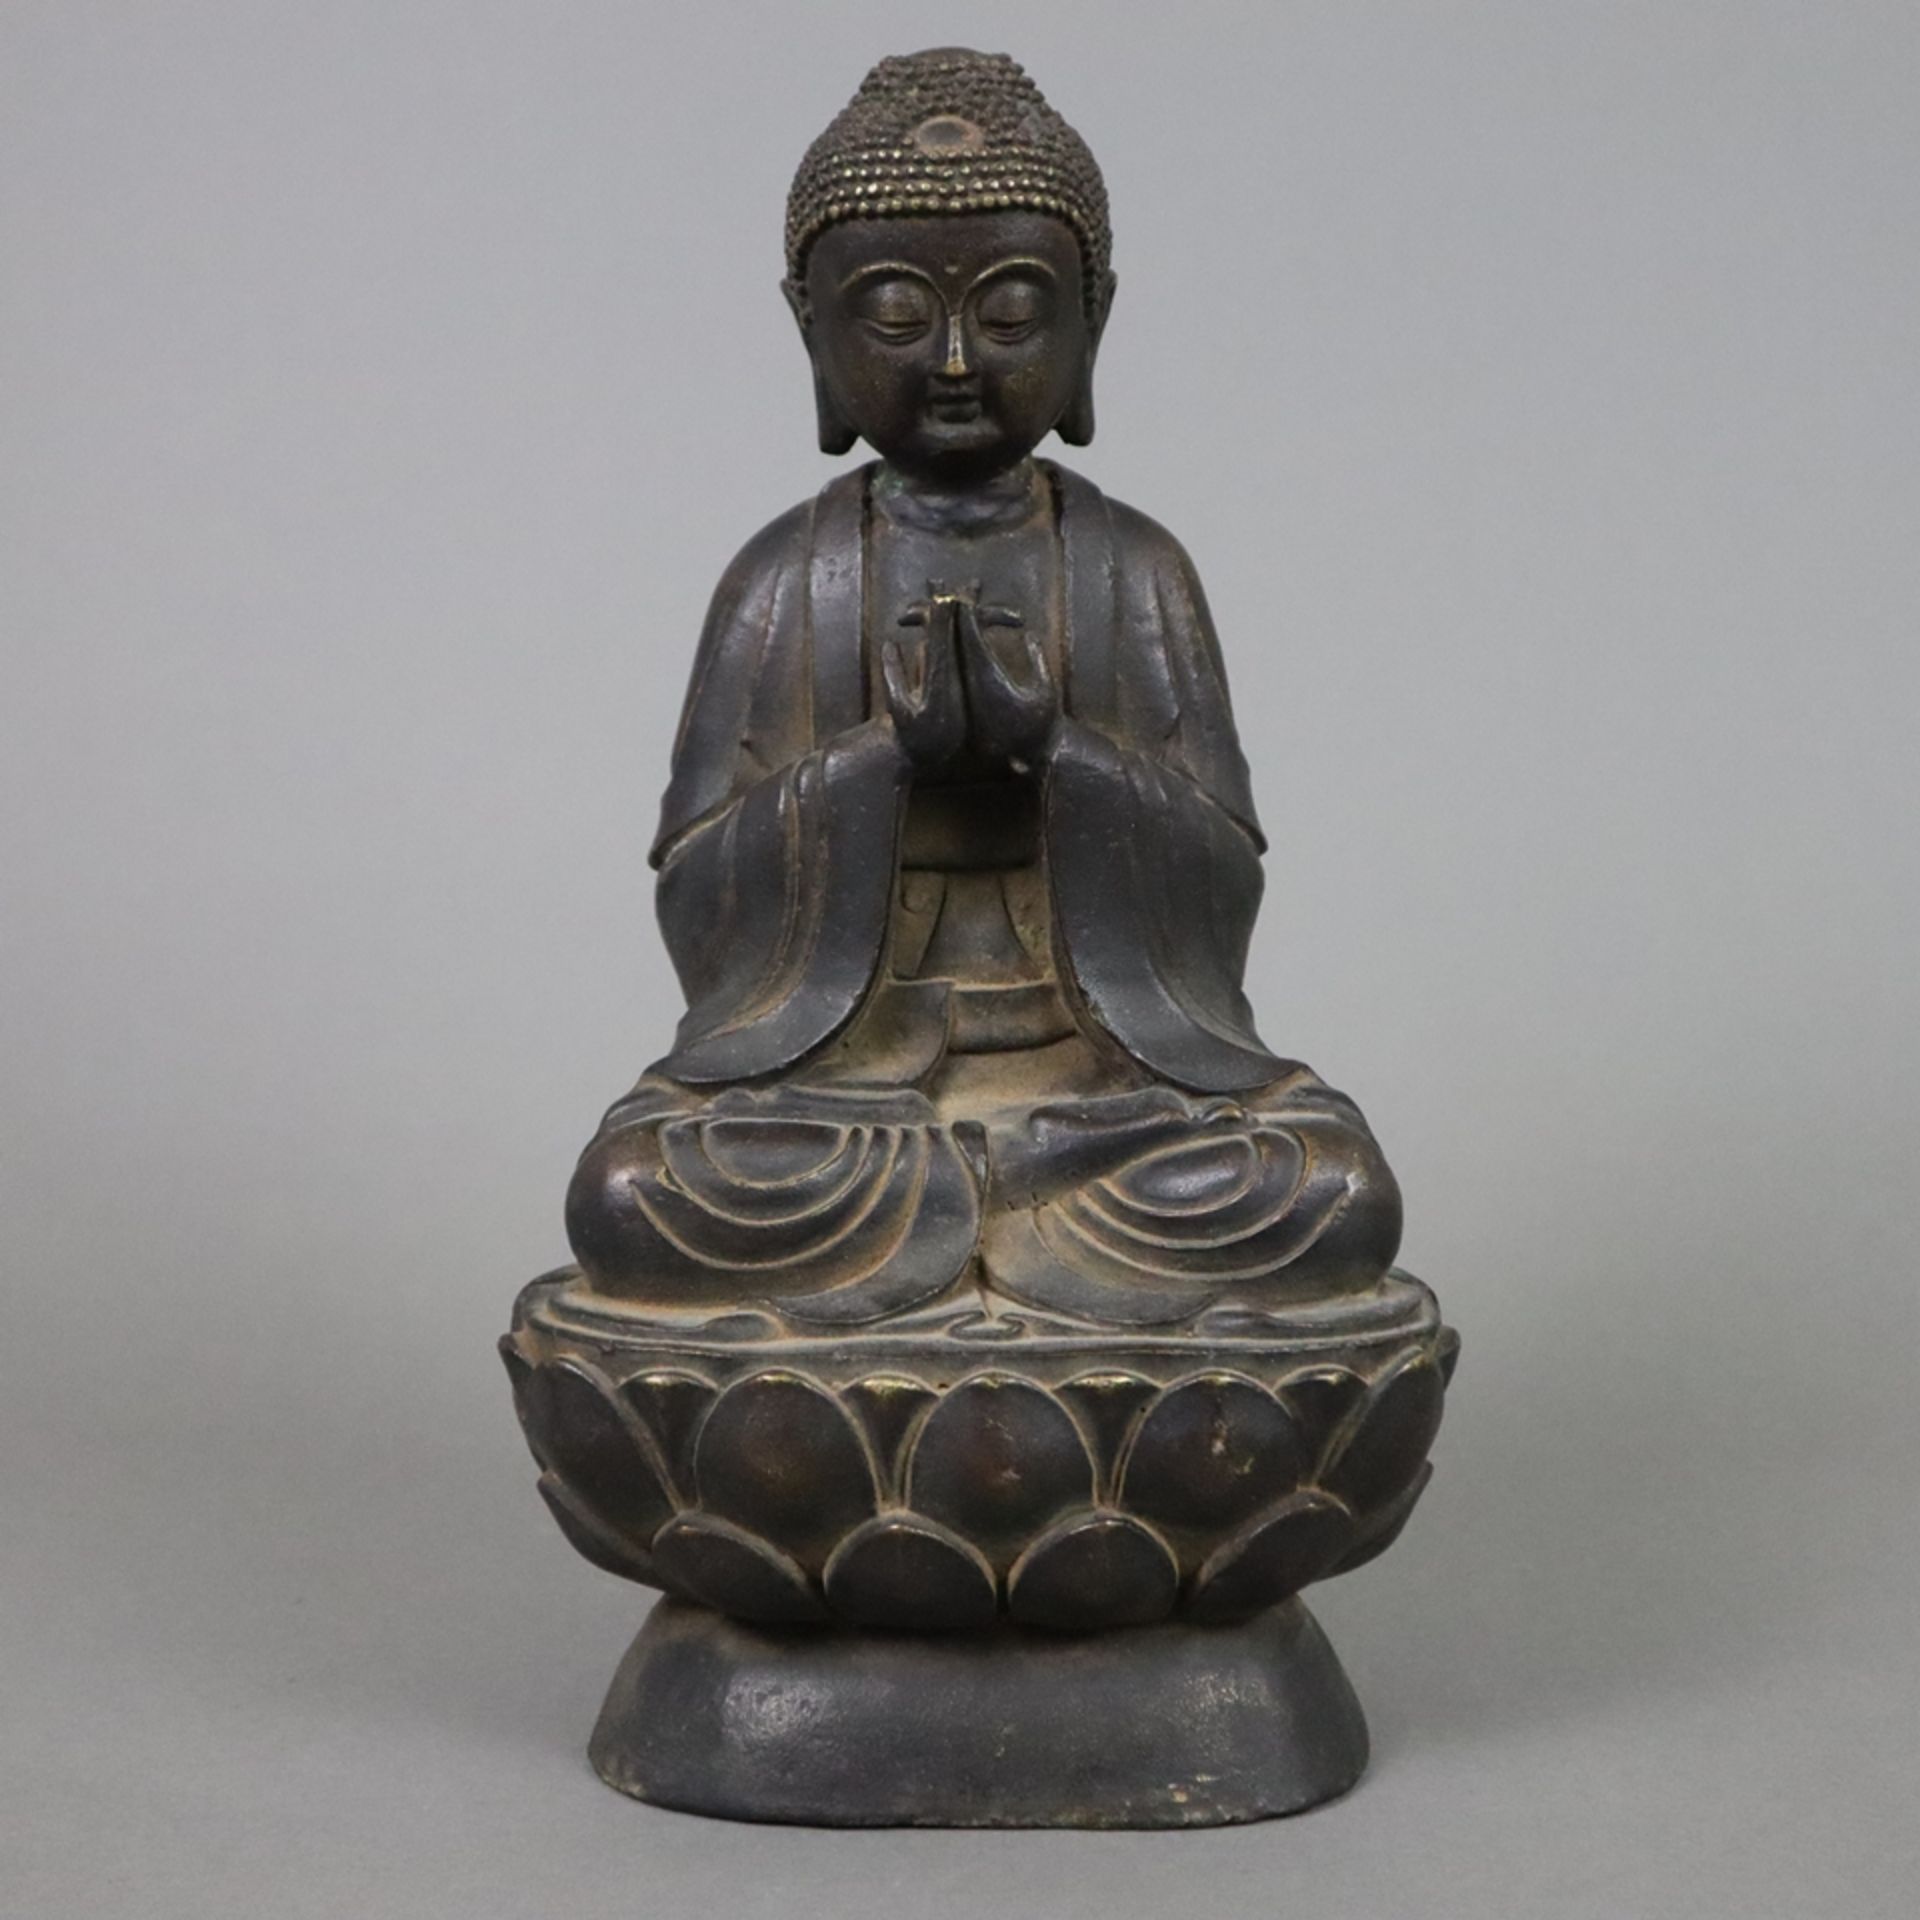 Buddhafigur - China, Bronzelegierung braun patiniert, in Meditationspose auf hohem Lotossockel sitz